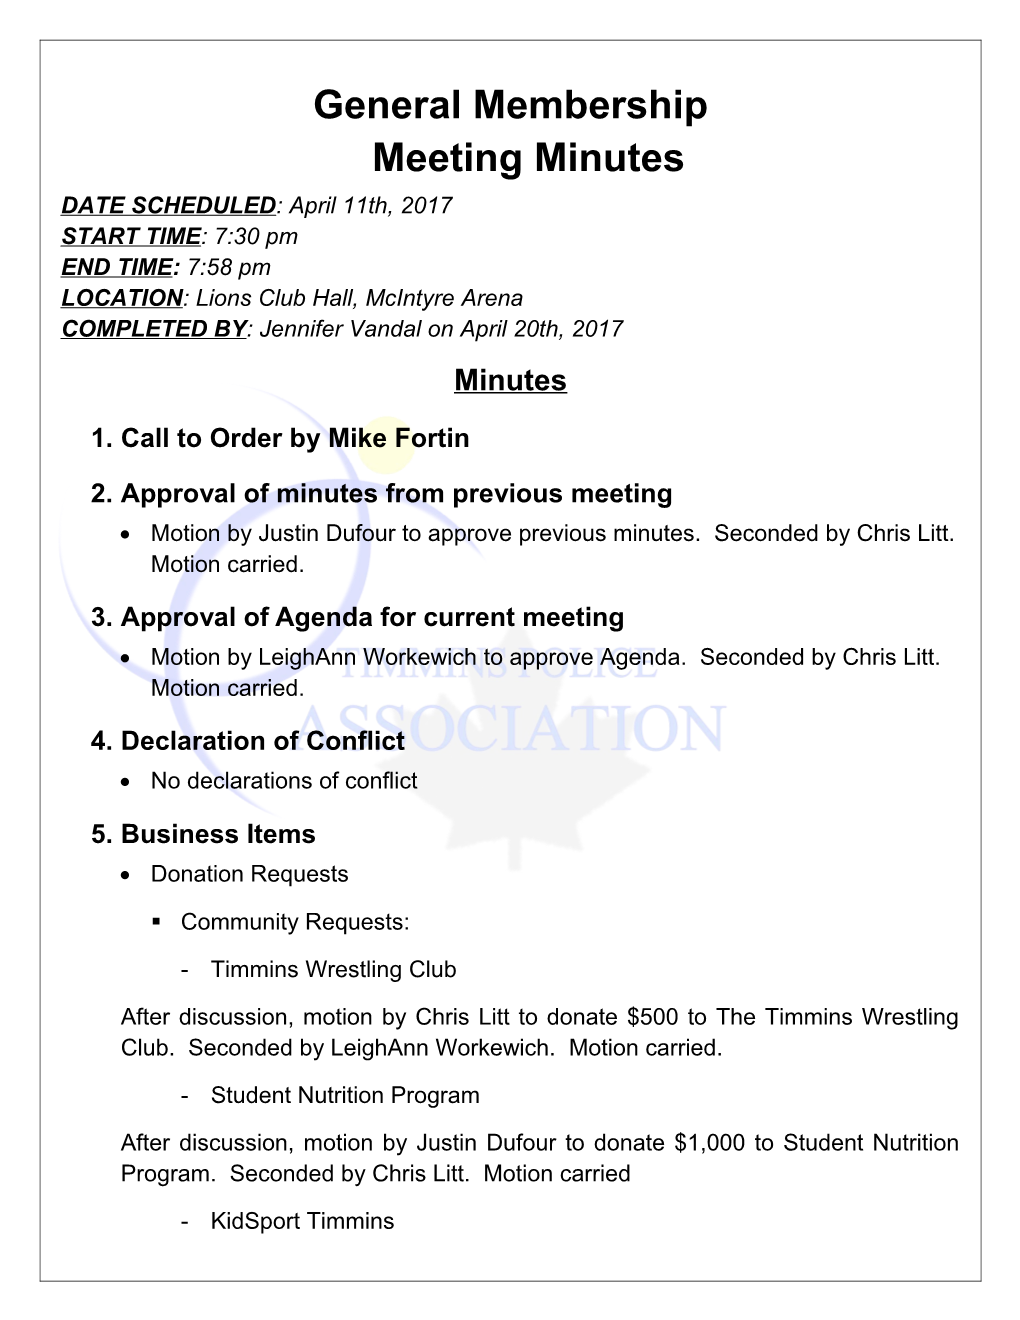 General Membershipmeeting Minutes